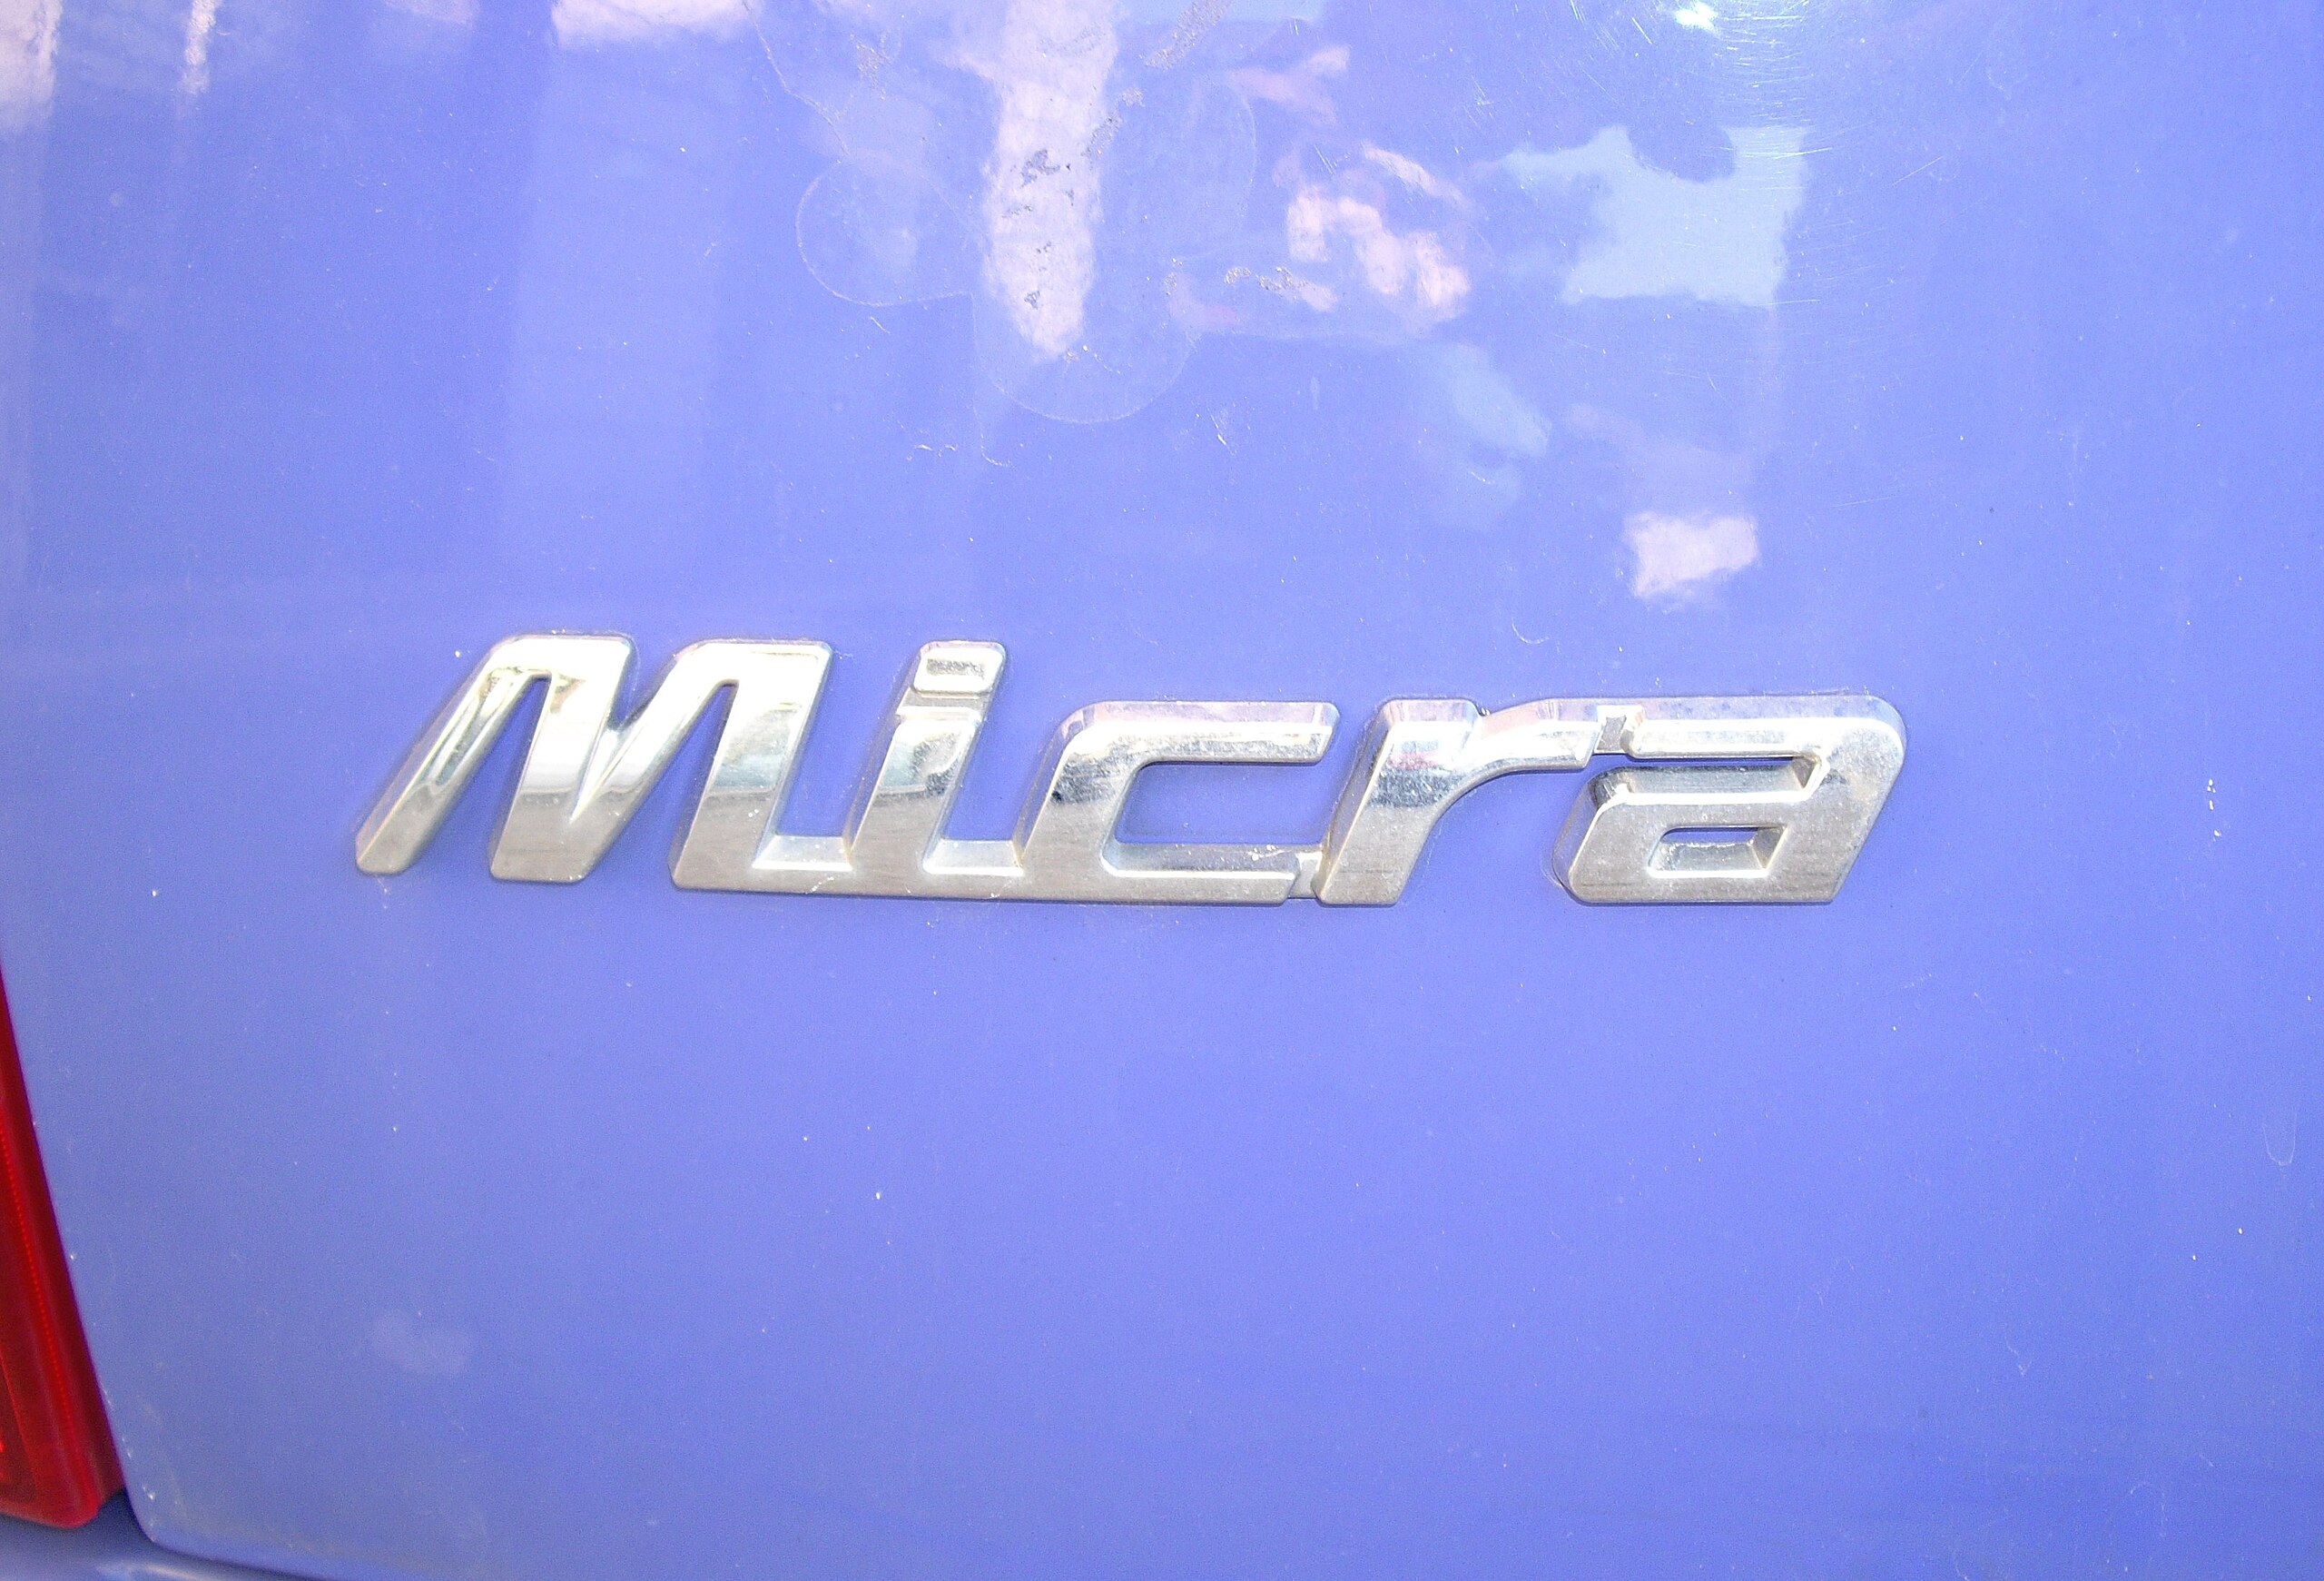 Nissan Micra - Wikipedia